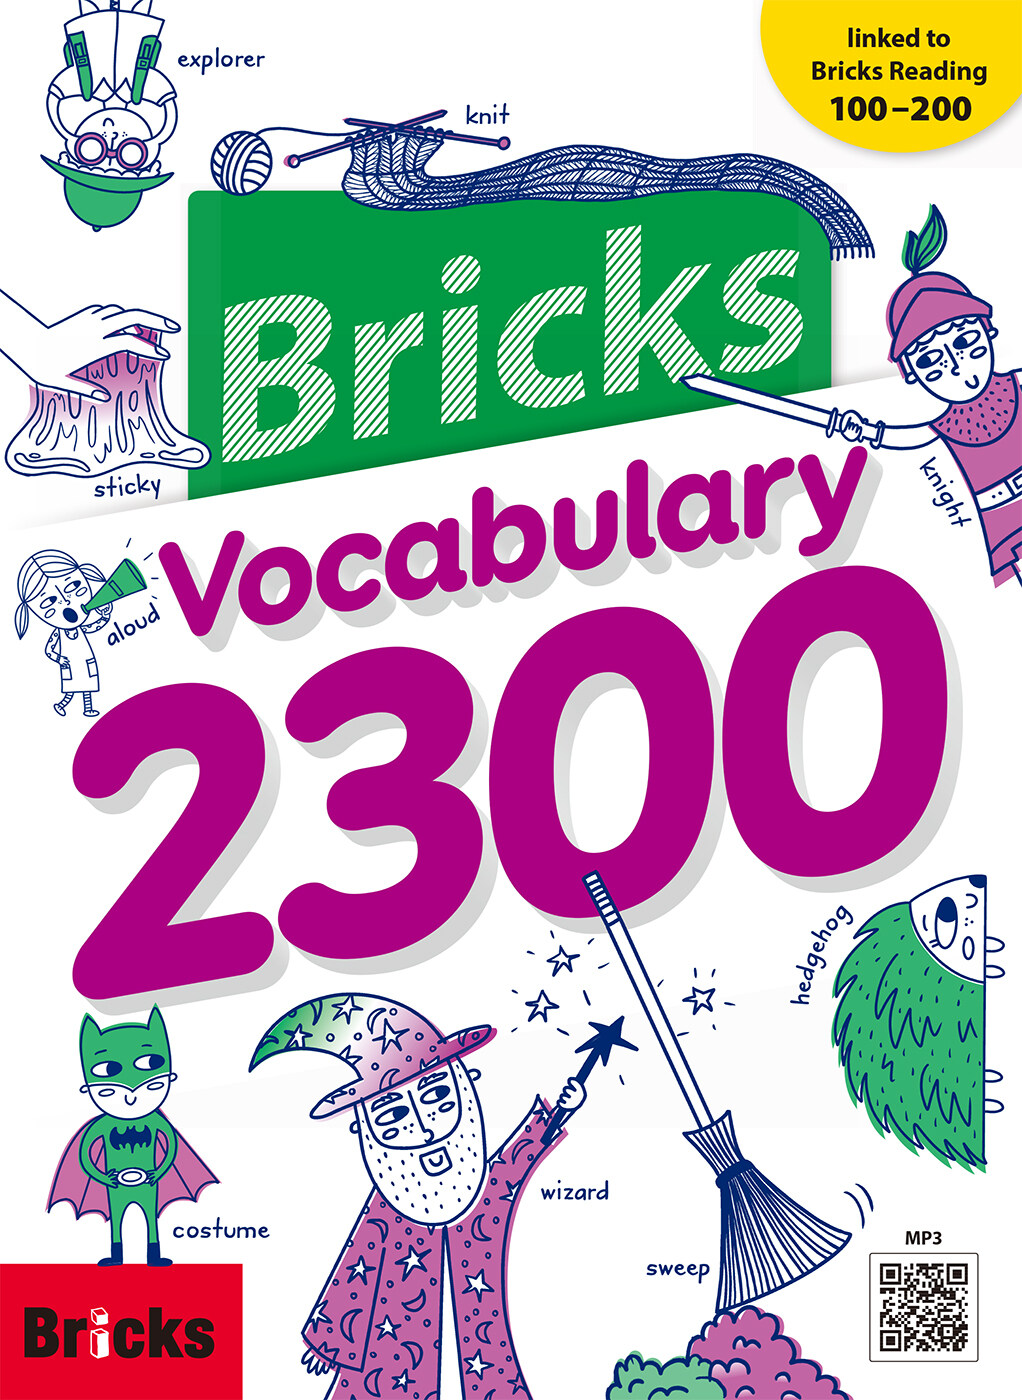 Bricks Vocabulary 2300